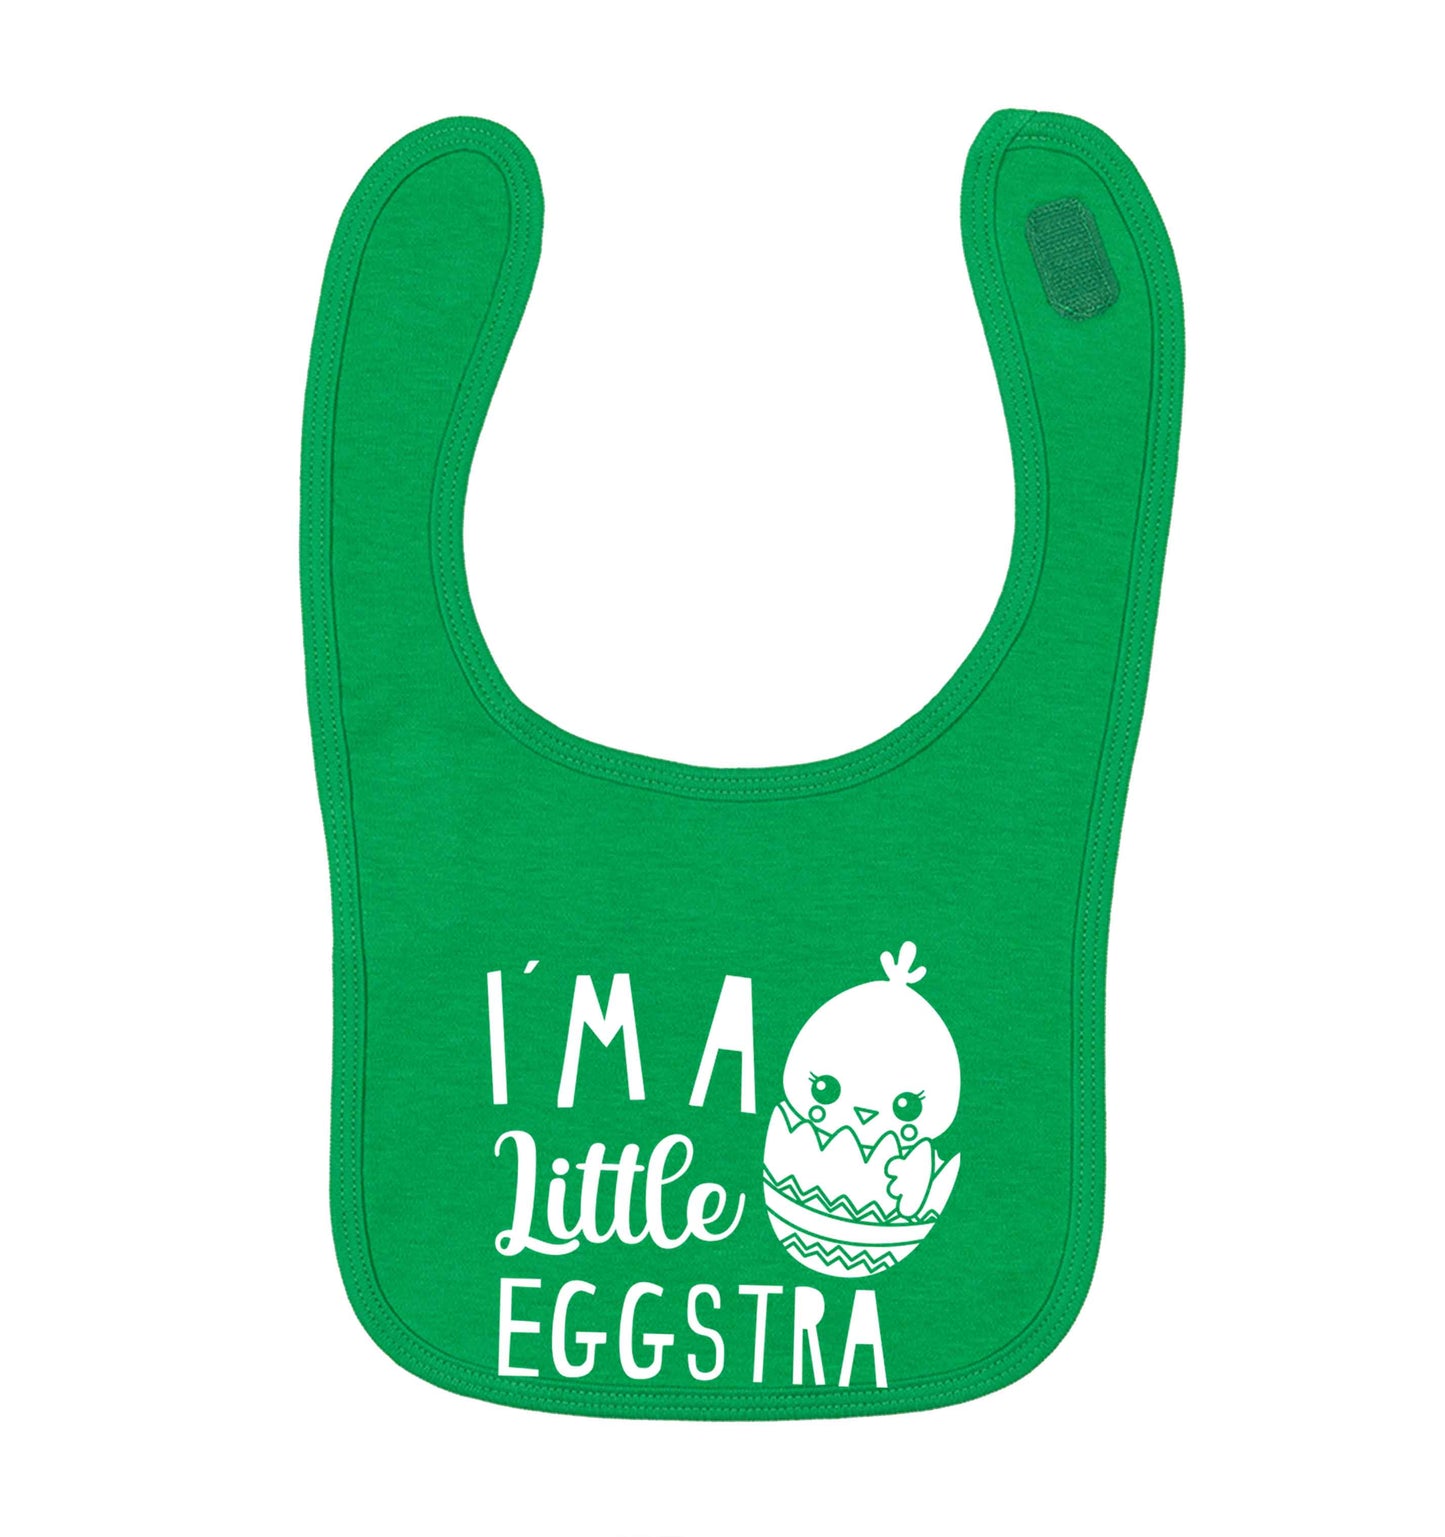 I'm a little eggstra green baby bib